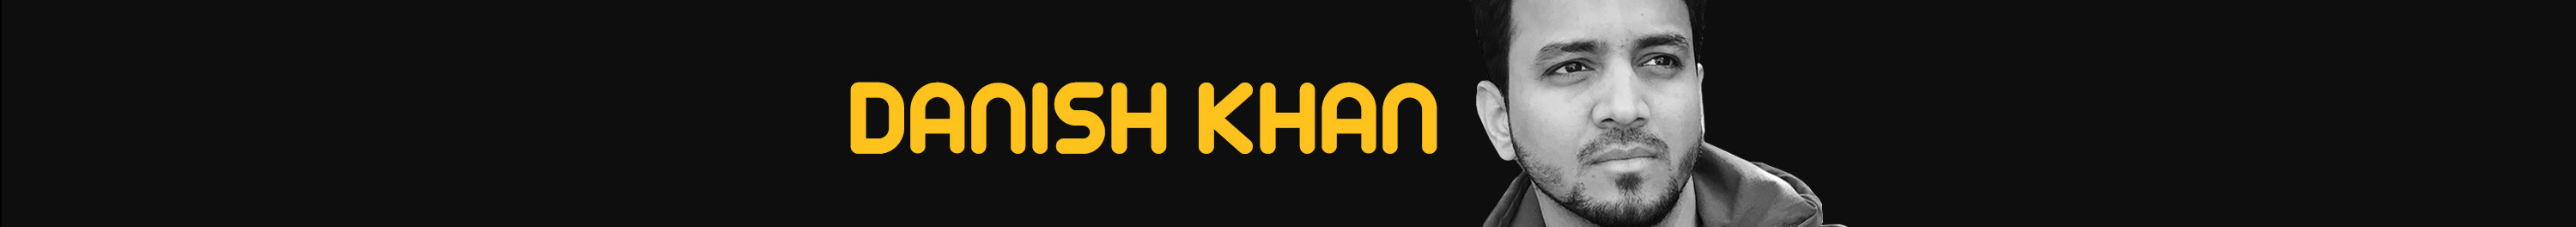 Danish Khan's profile banner